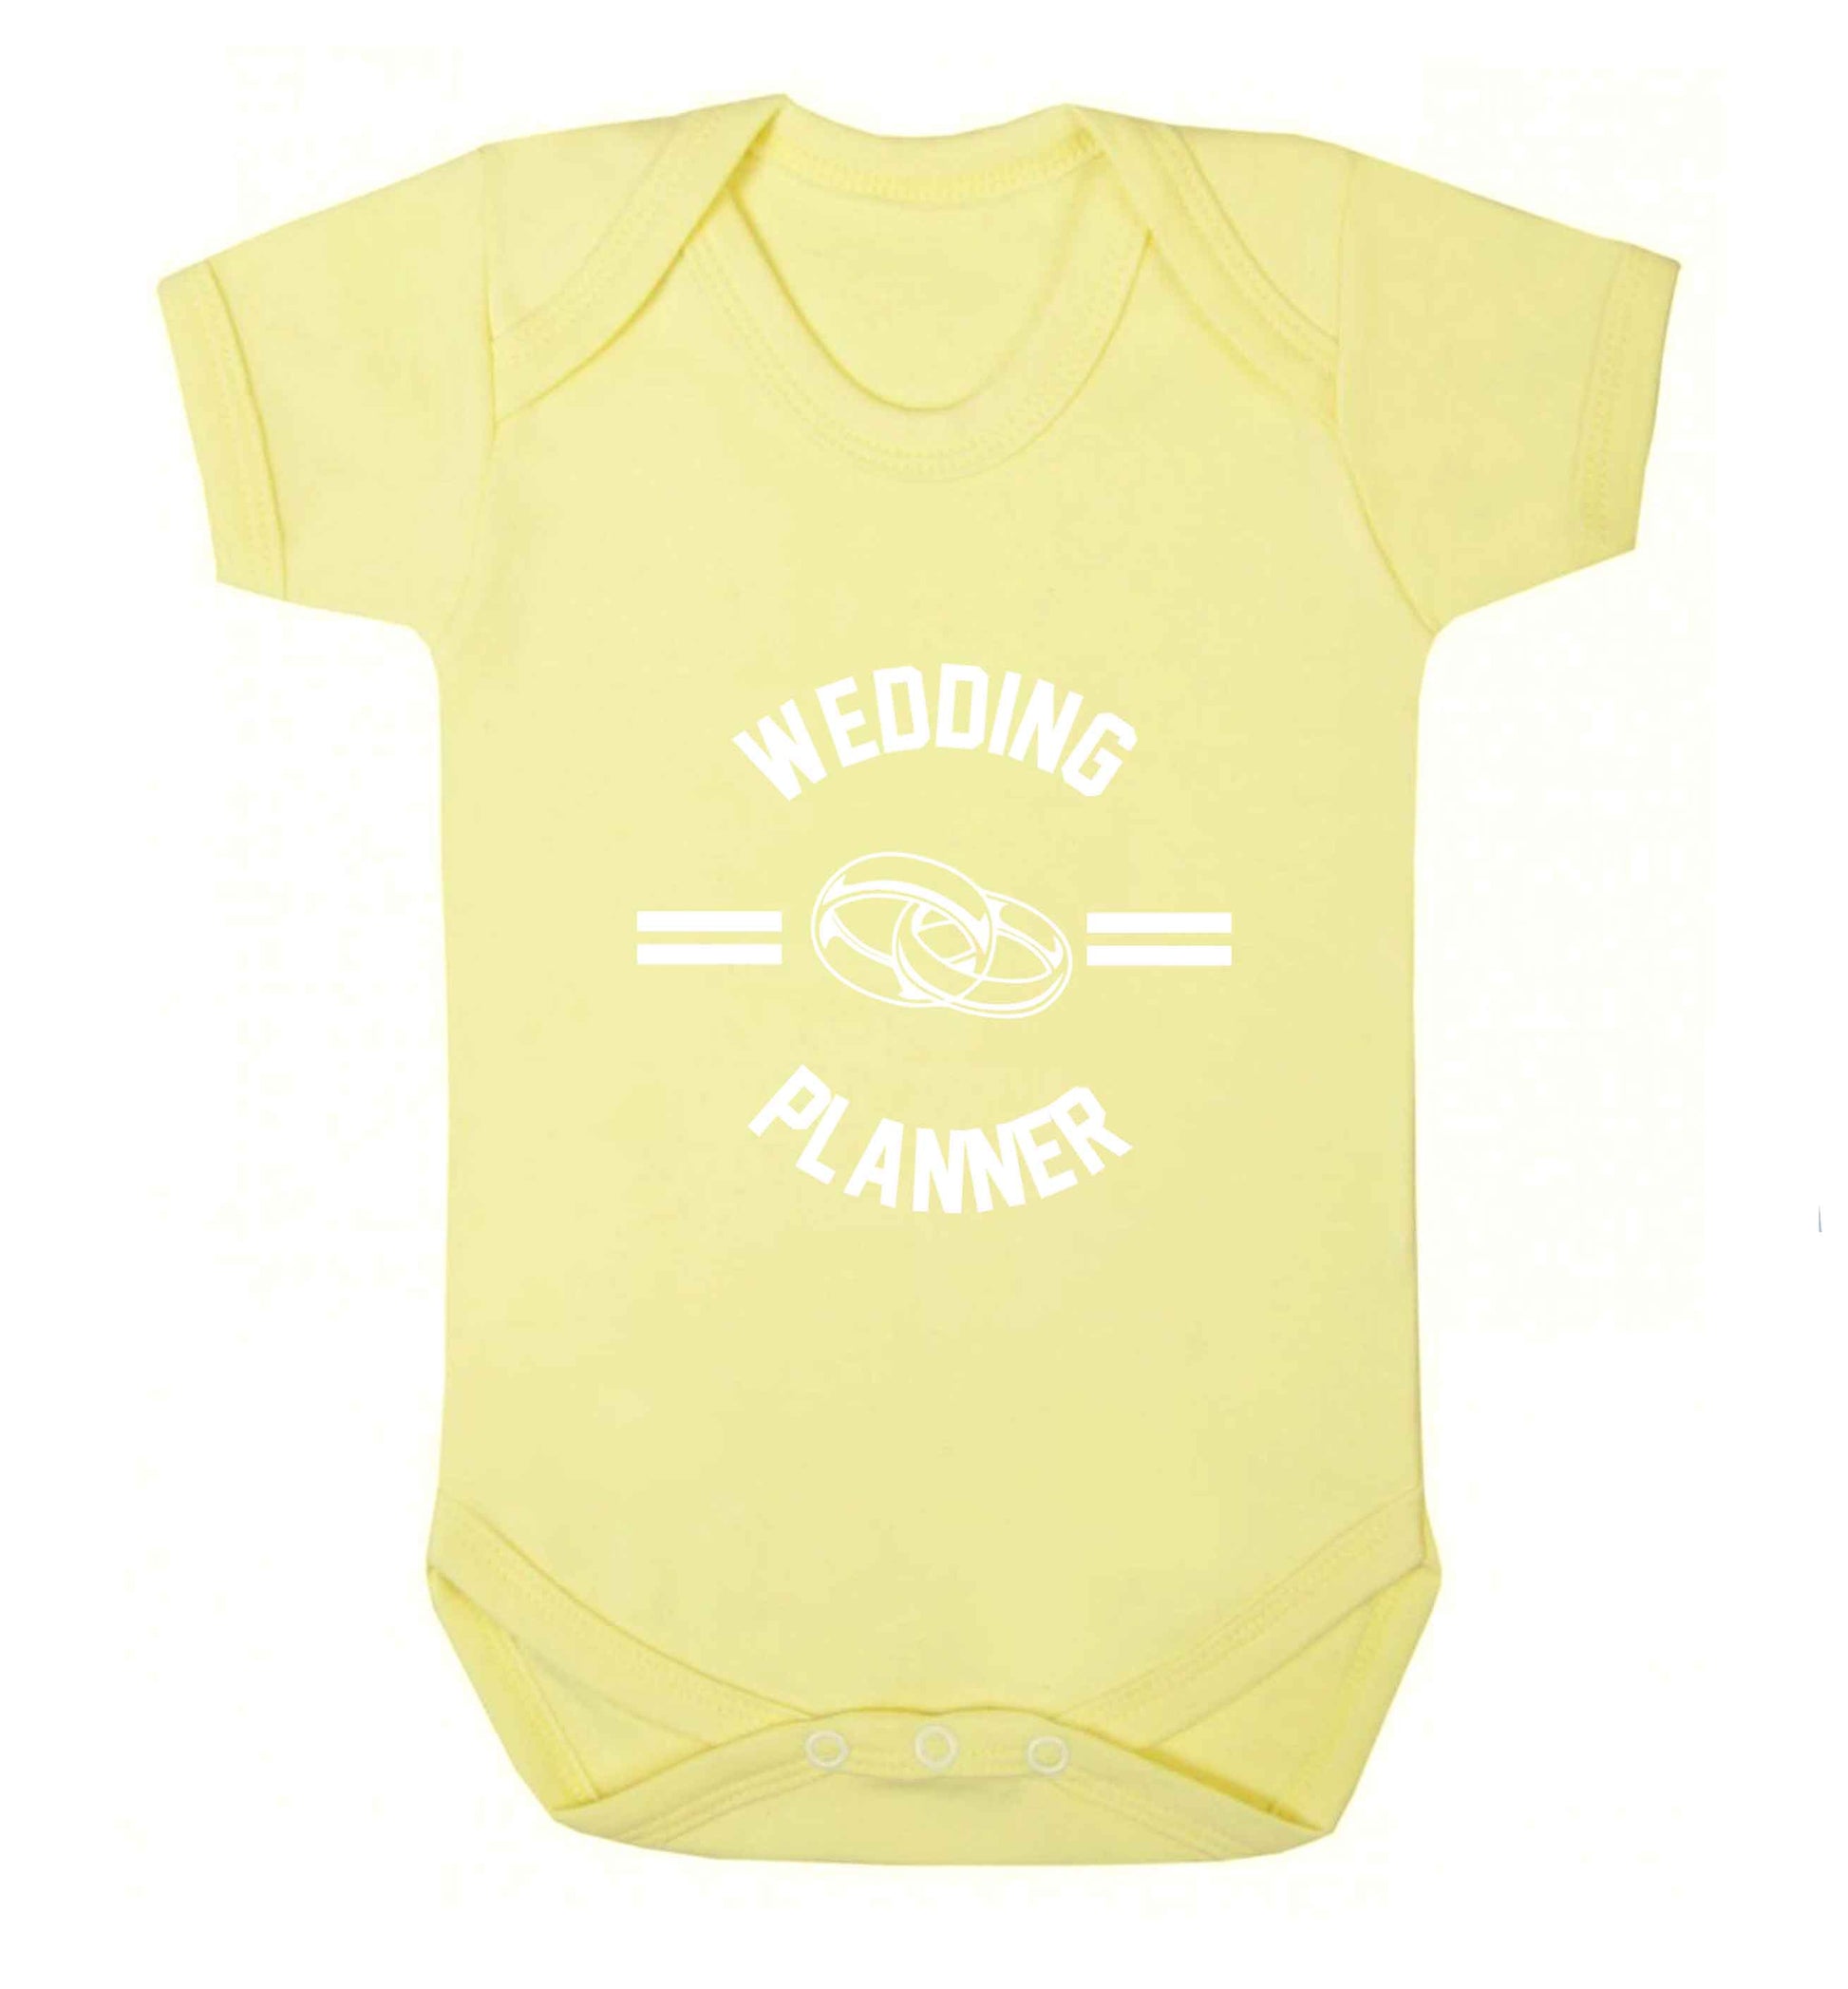 Wedding planner baby vest pale yellow 18-24 months